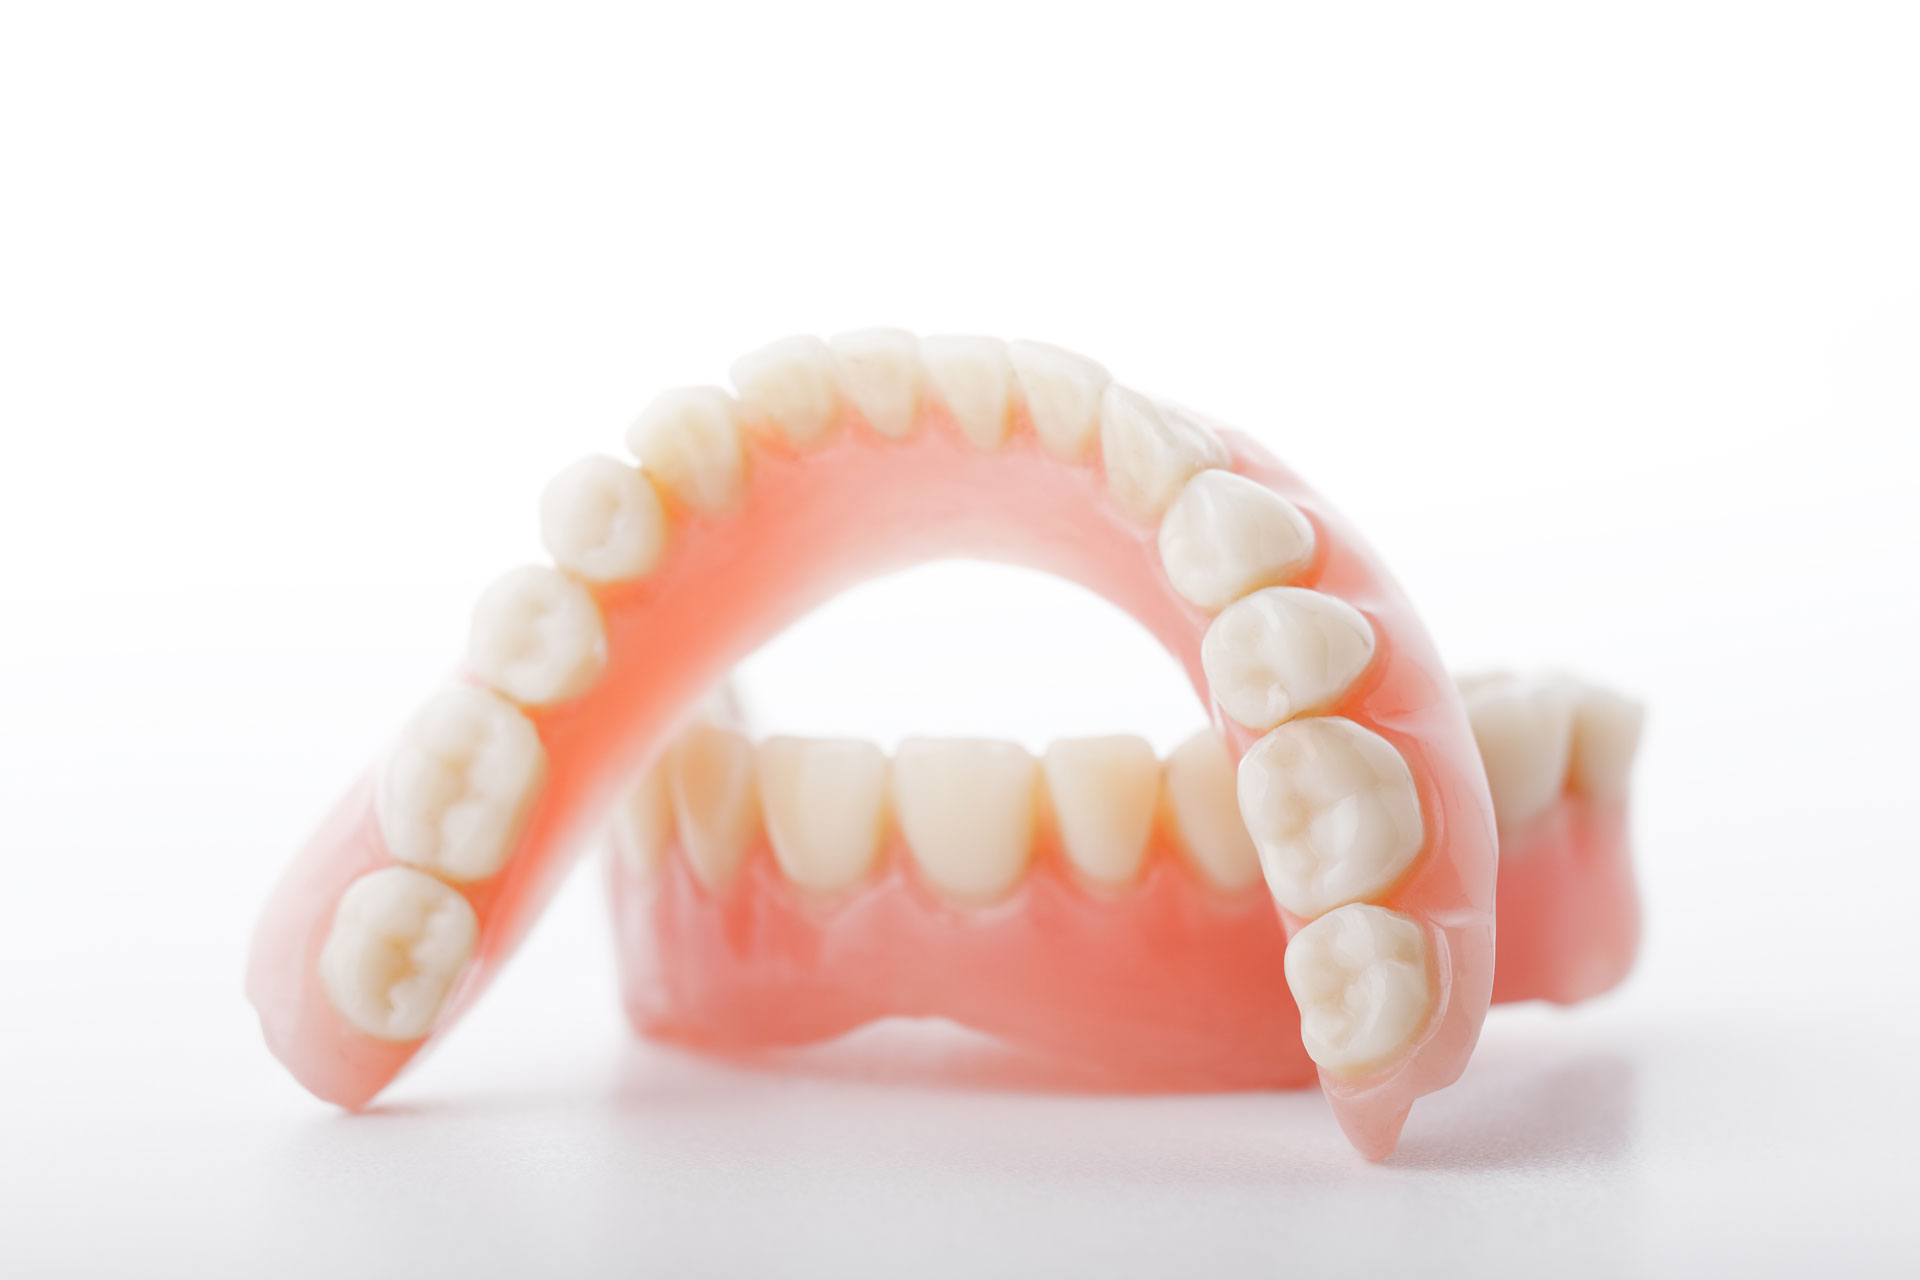 full conventional dentures